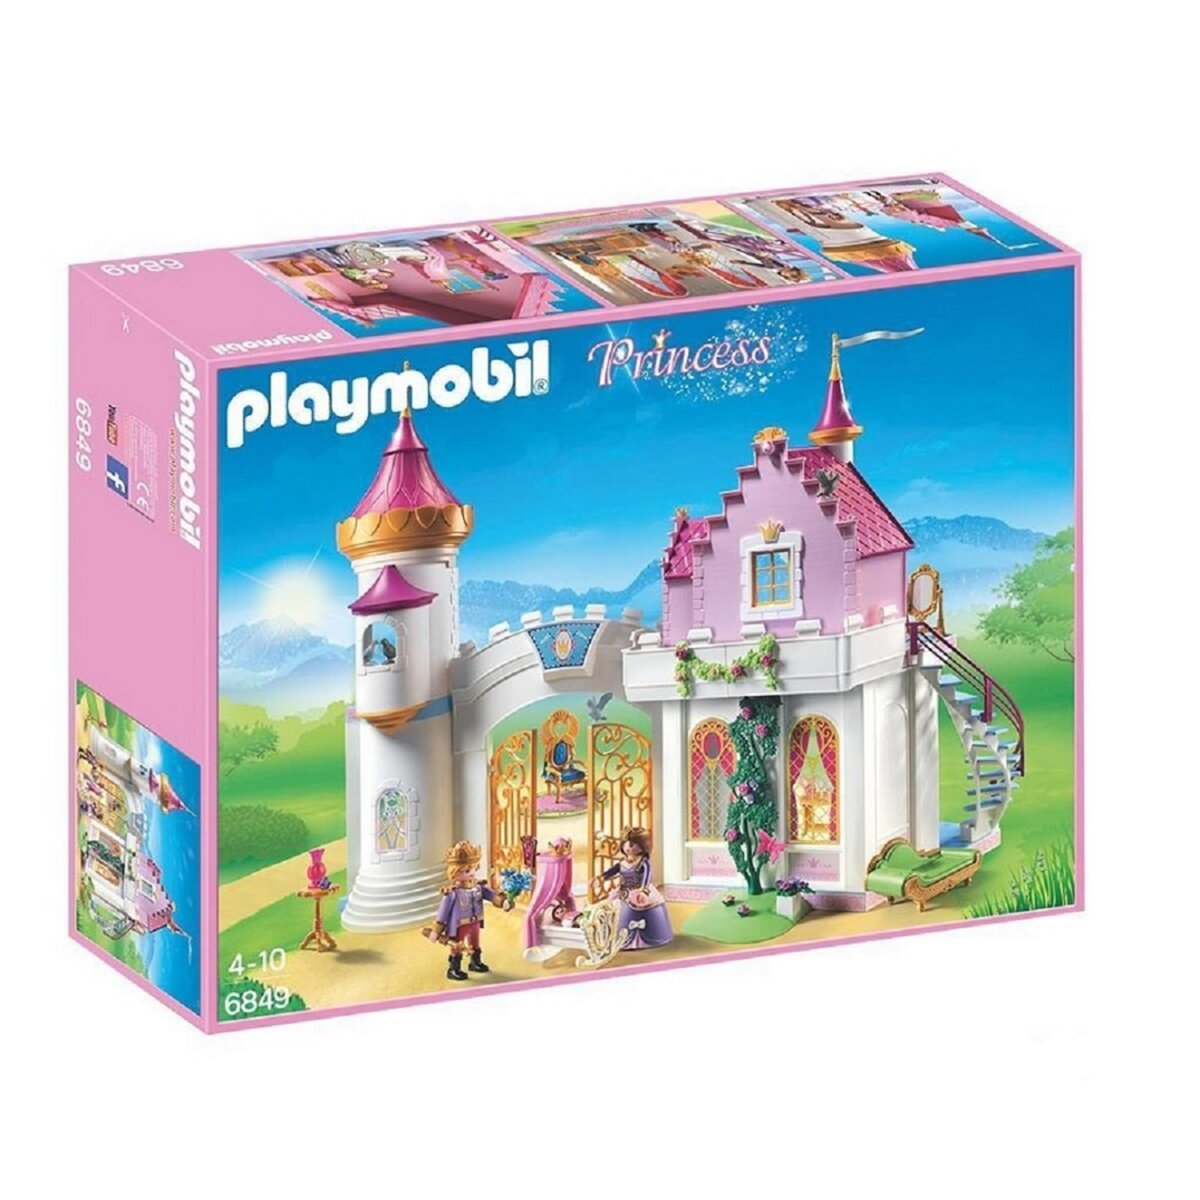 PLAYMOBIL 6849 - Princess - Manoir royal